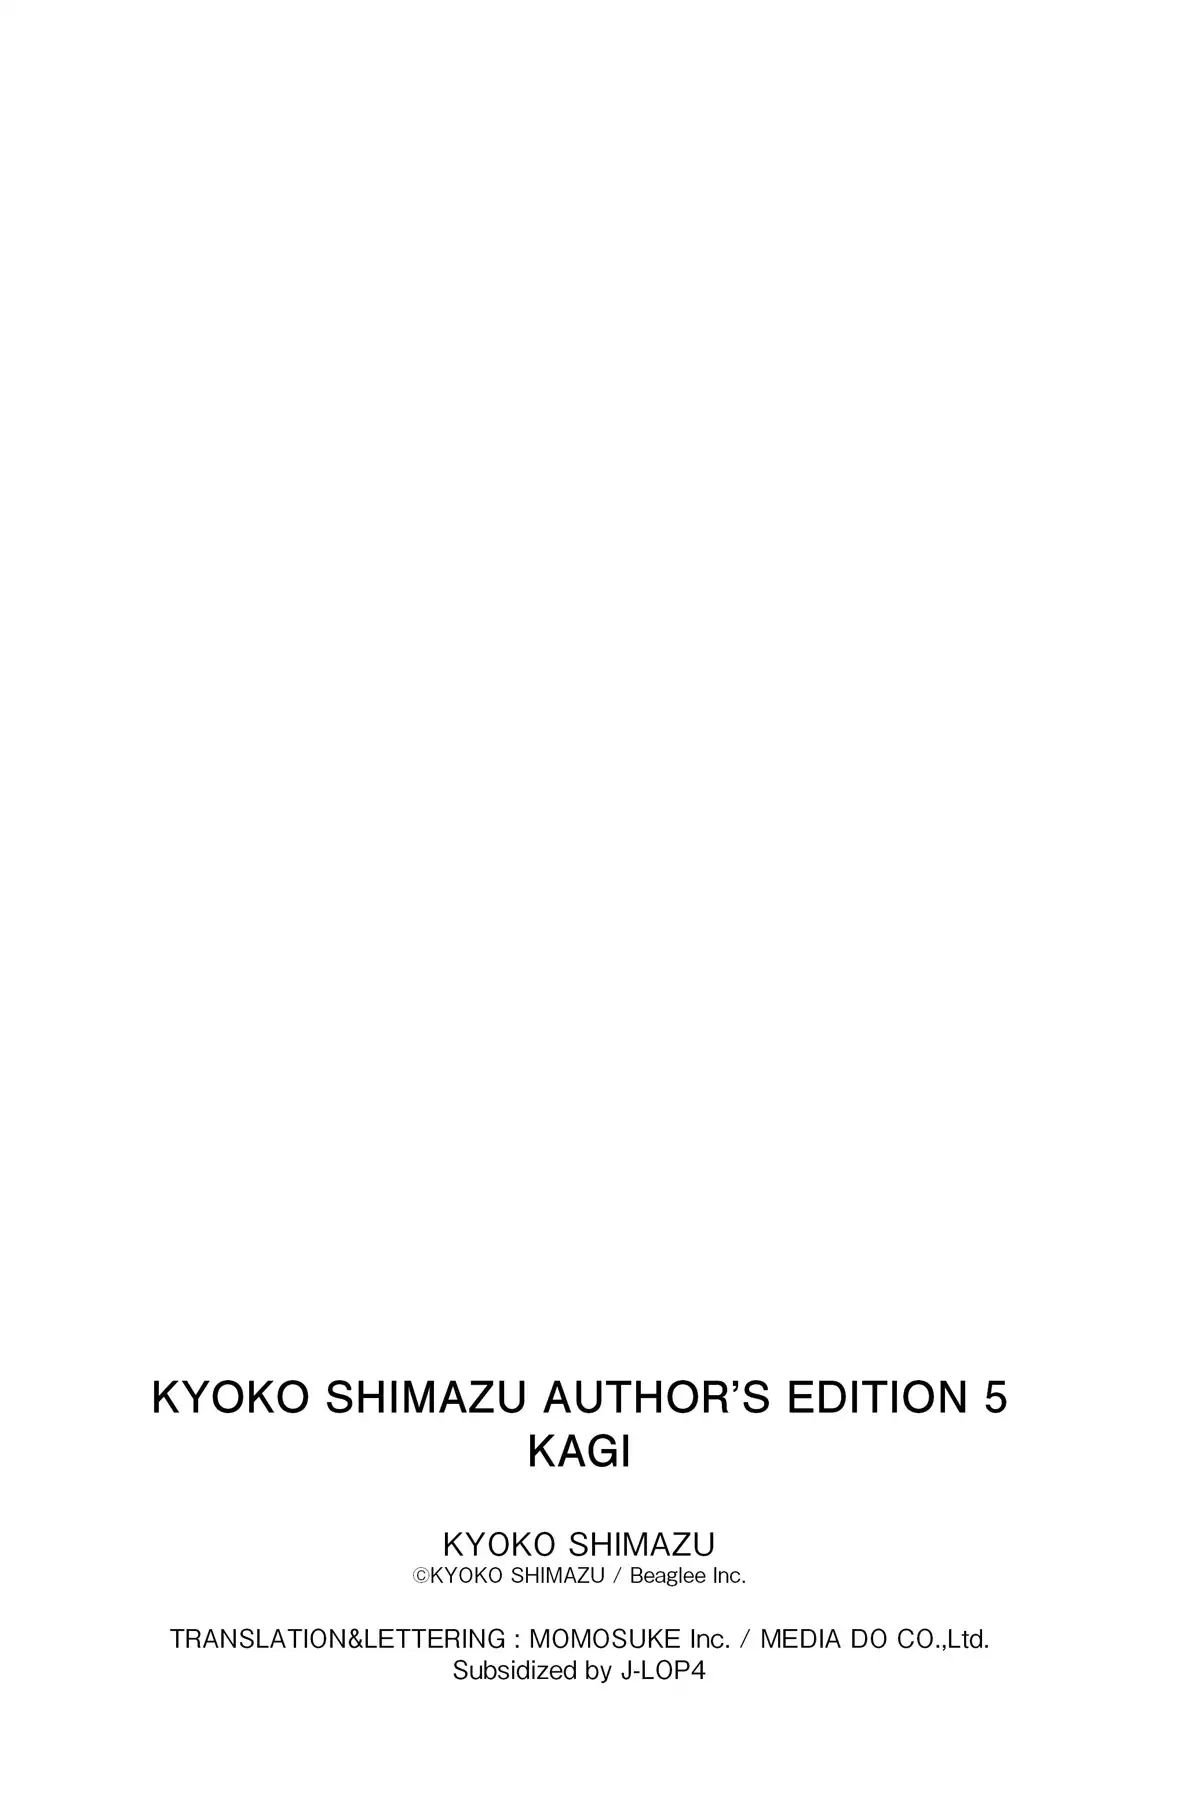 Kyoko Shimazu Author's Edition Vol.5 Shot 9: The Key To Hapiness